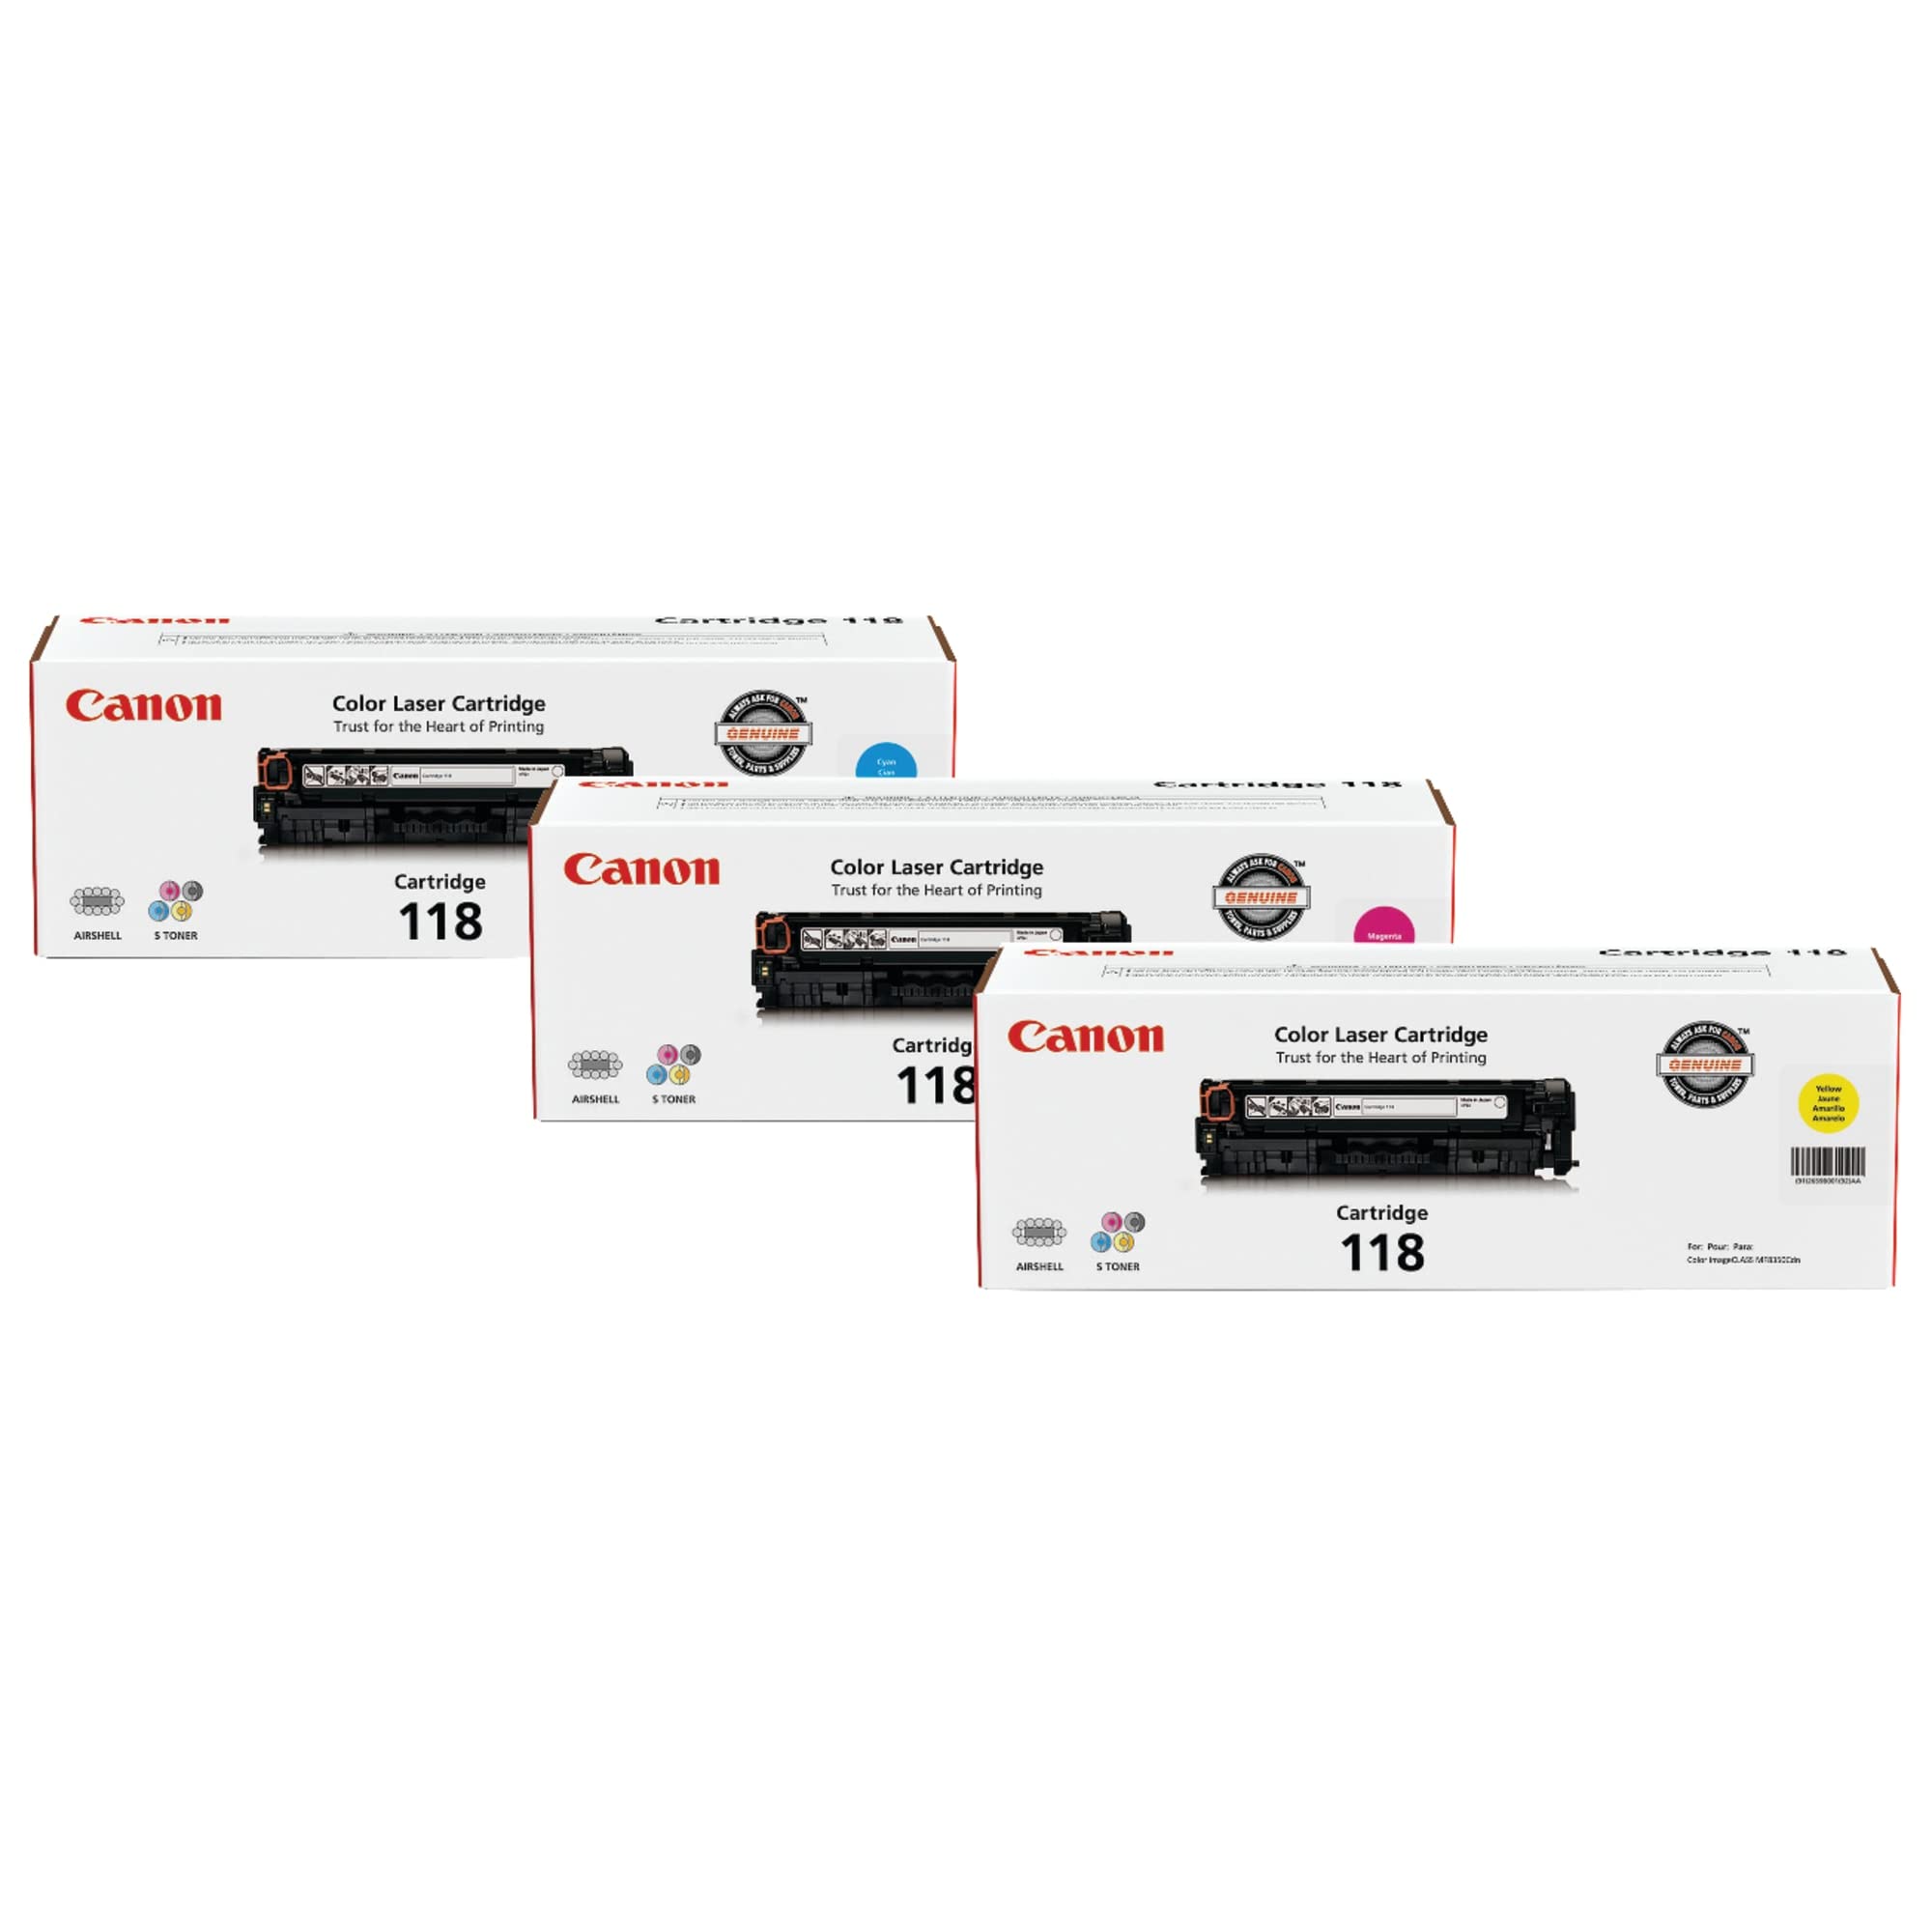 Canon Genuine Toner Bundle 118 (2660B015), 3 Pack (1 Each: Cyan, Magenta, Yellow), for Canon Color imageCLASS MF8350Cdn, MF8380Cdw, MF8580Cdw, MF729Cdw, MF726Cdw, LBP7200Cdn, LBP7660Cdn Laser Printers